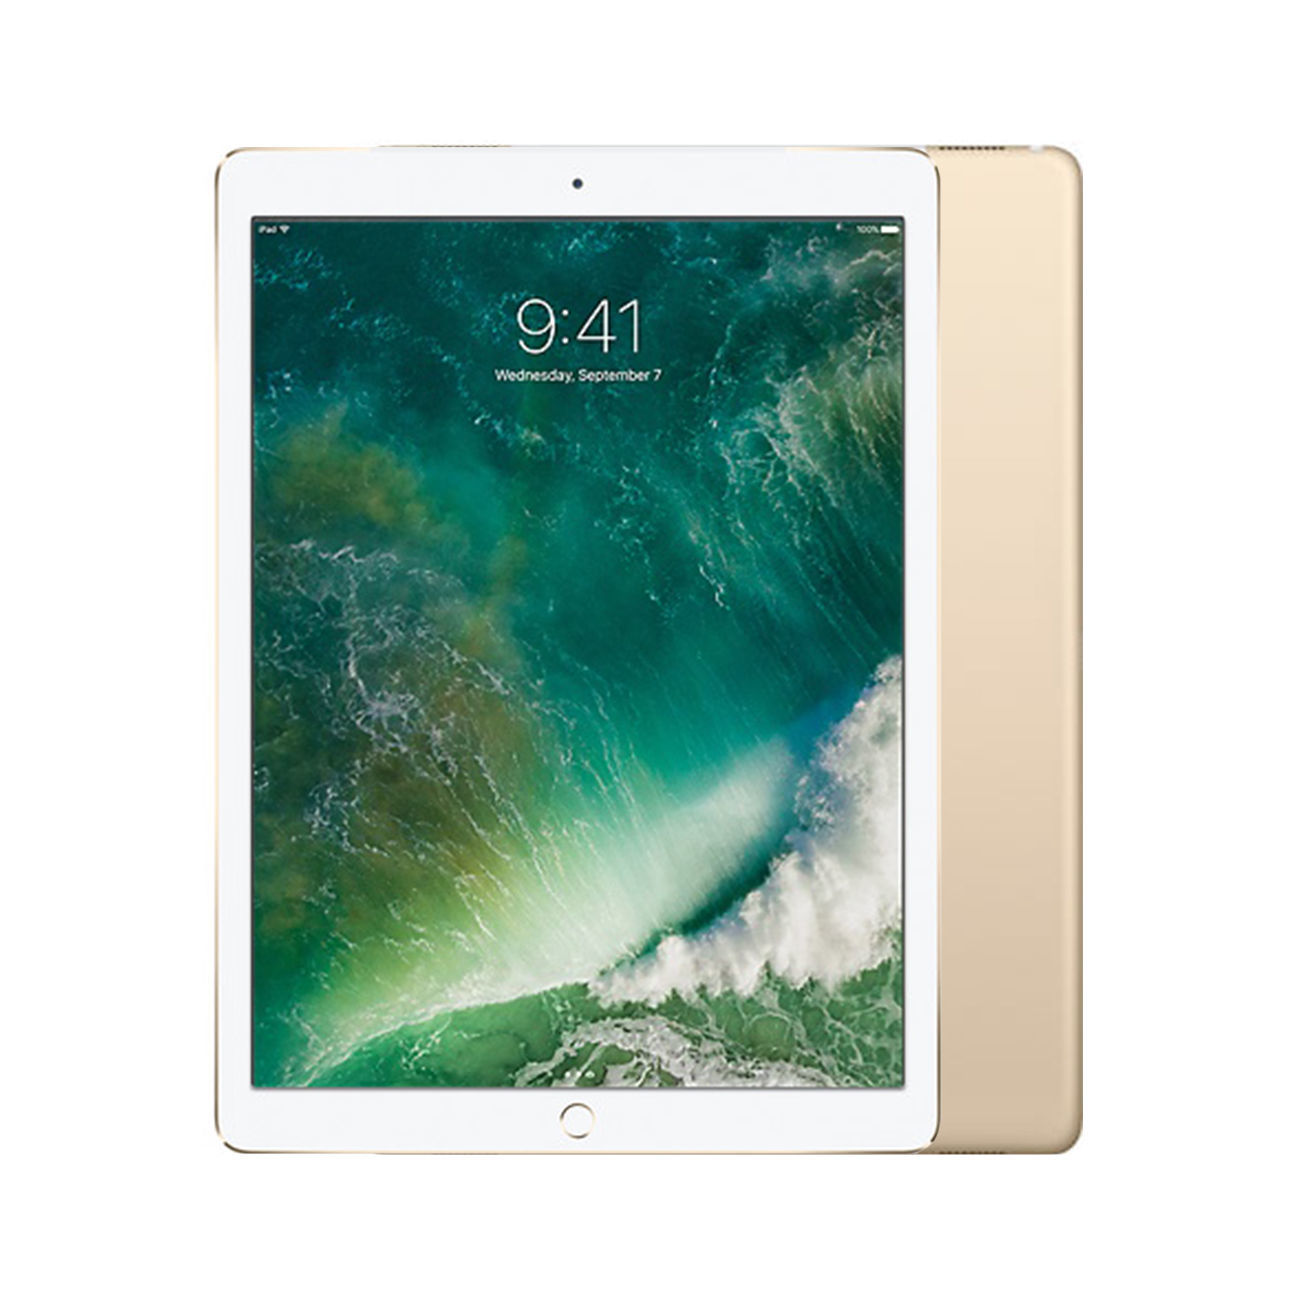 Apple iPad Pro 9.7 Wi-Fi + Cellular [32GB] [Gold] [Excellent] [12M]